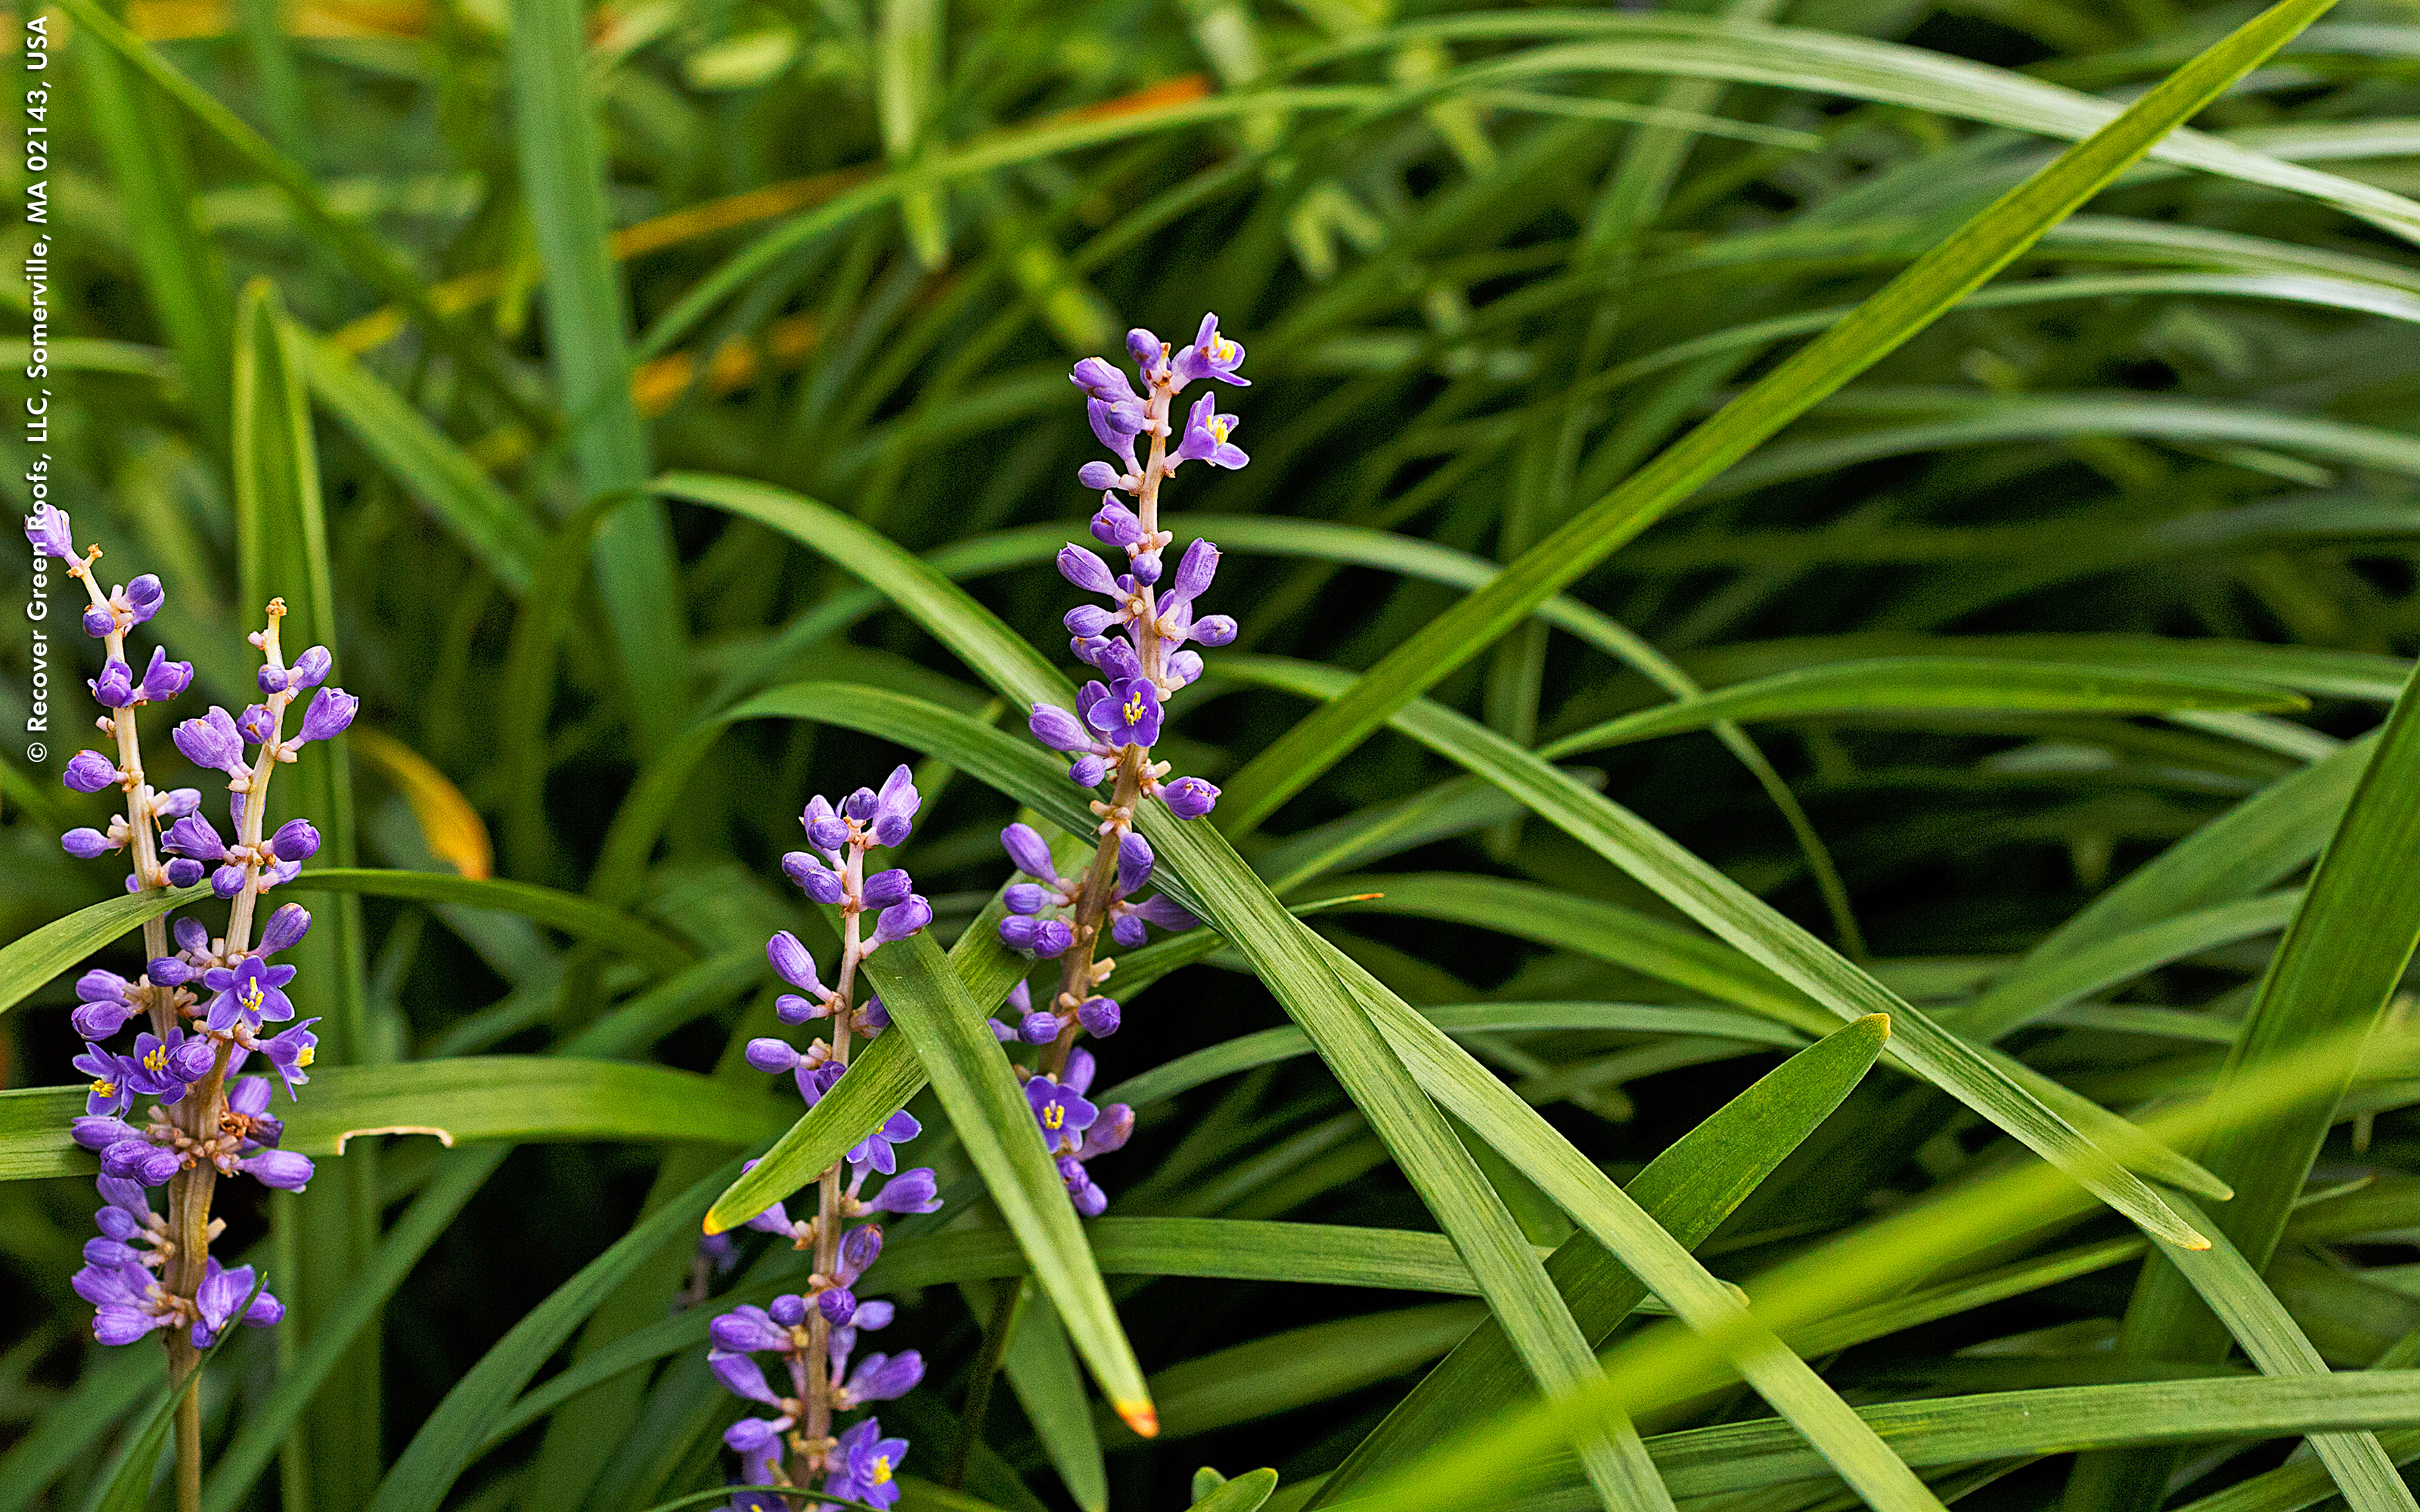 Purple flowers amidst grasses